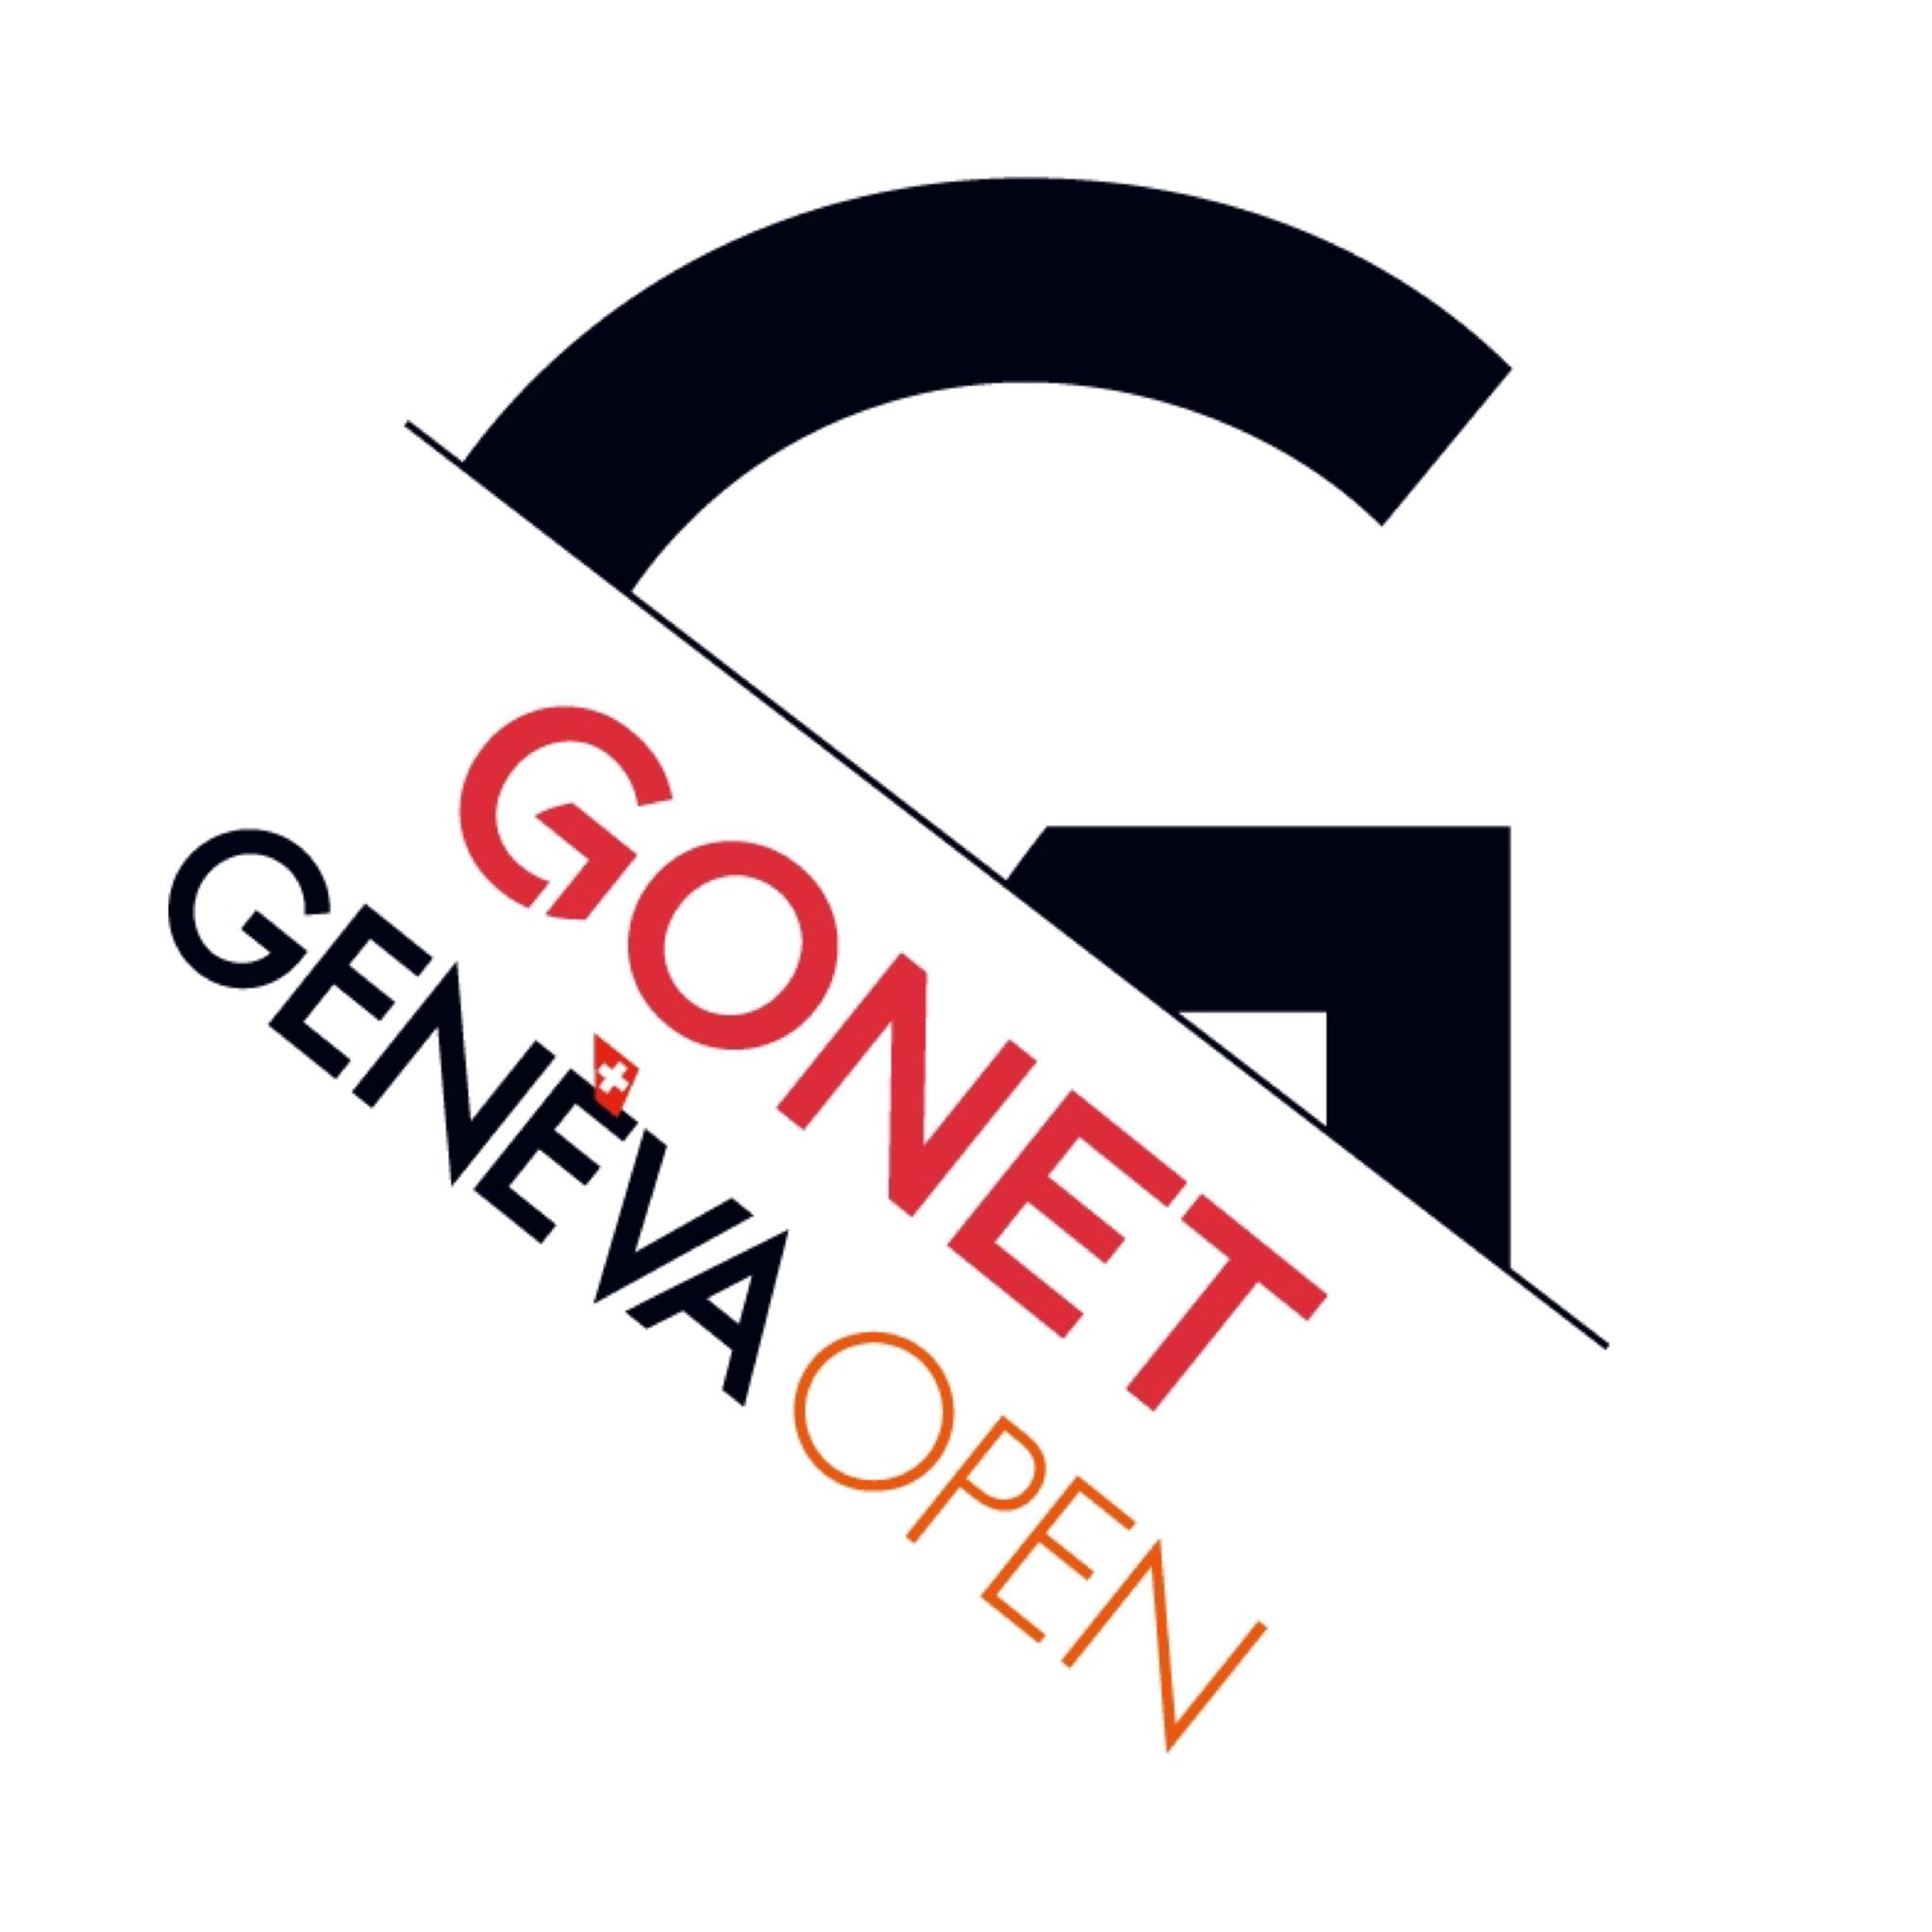 Geneva Open tickets